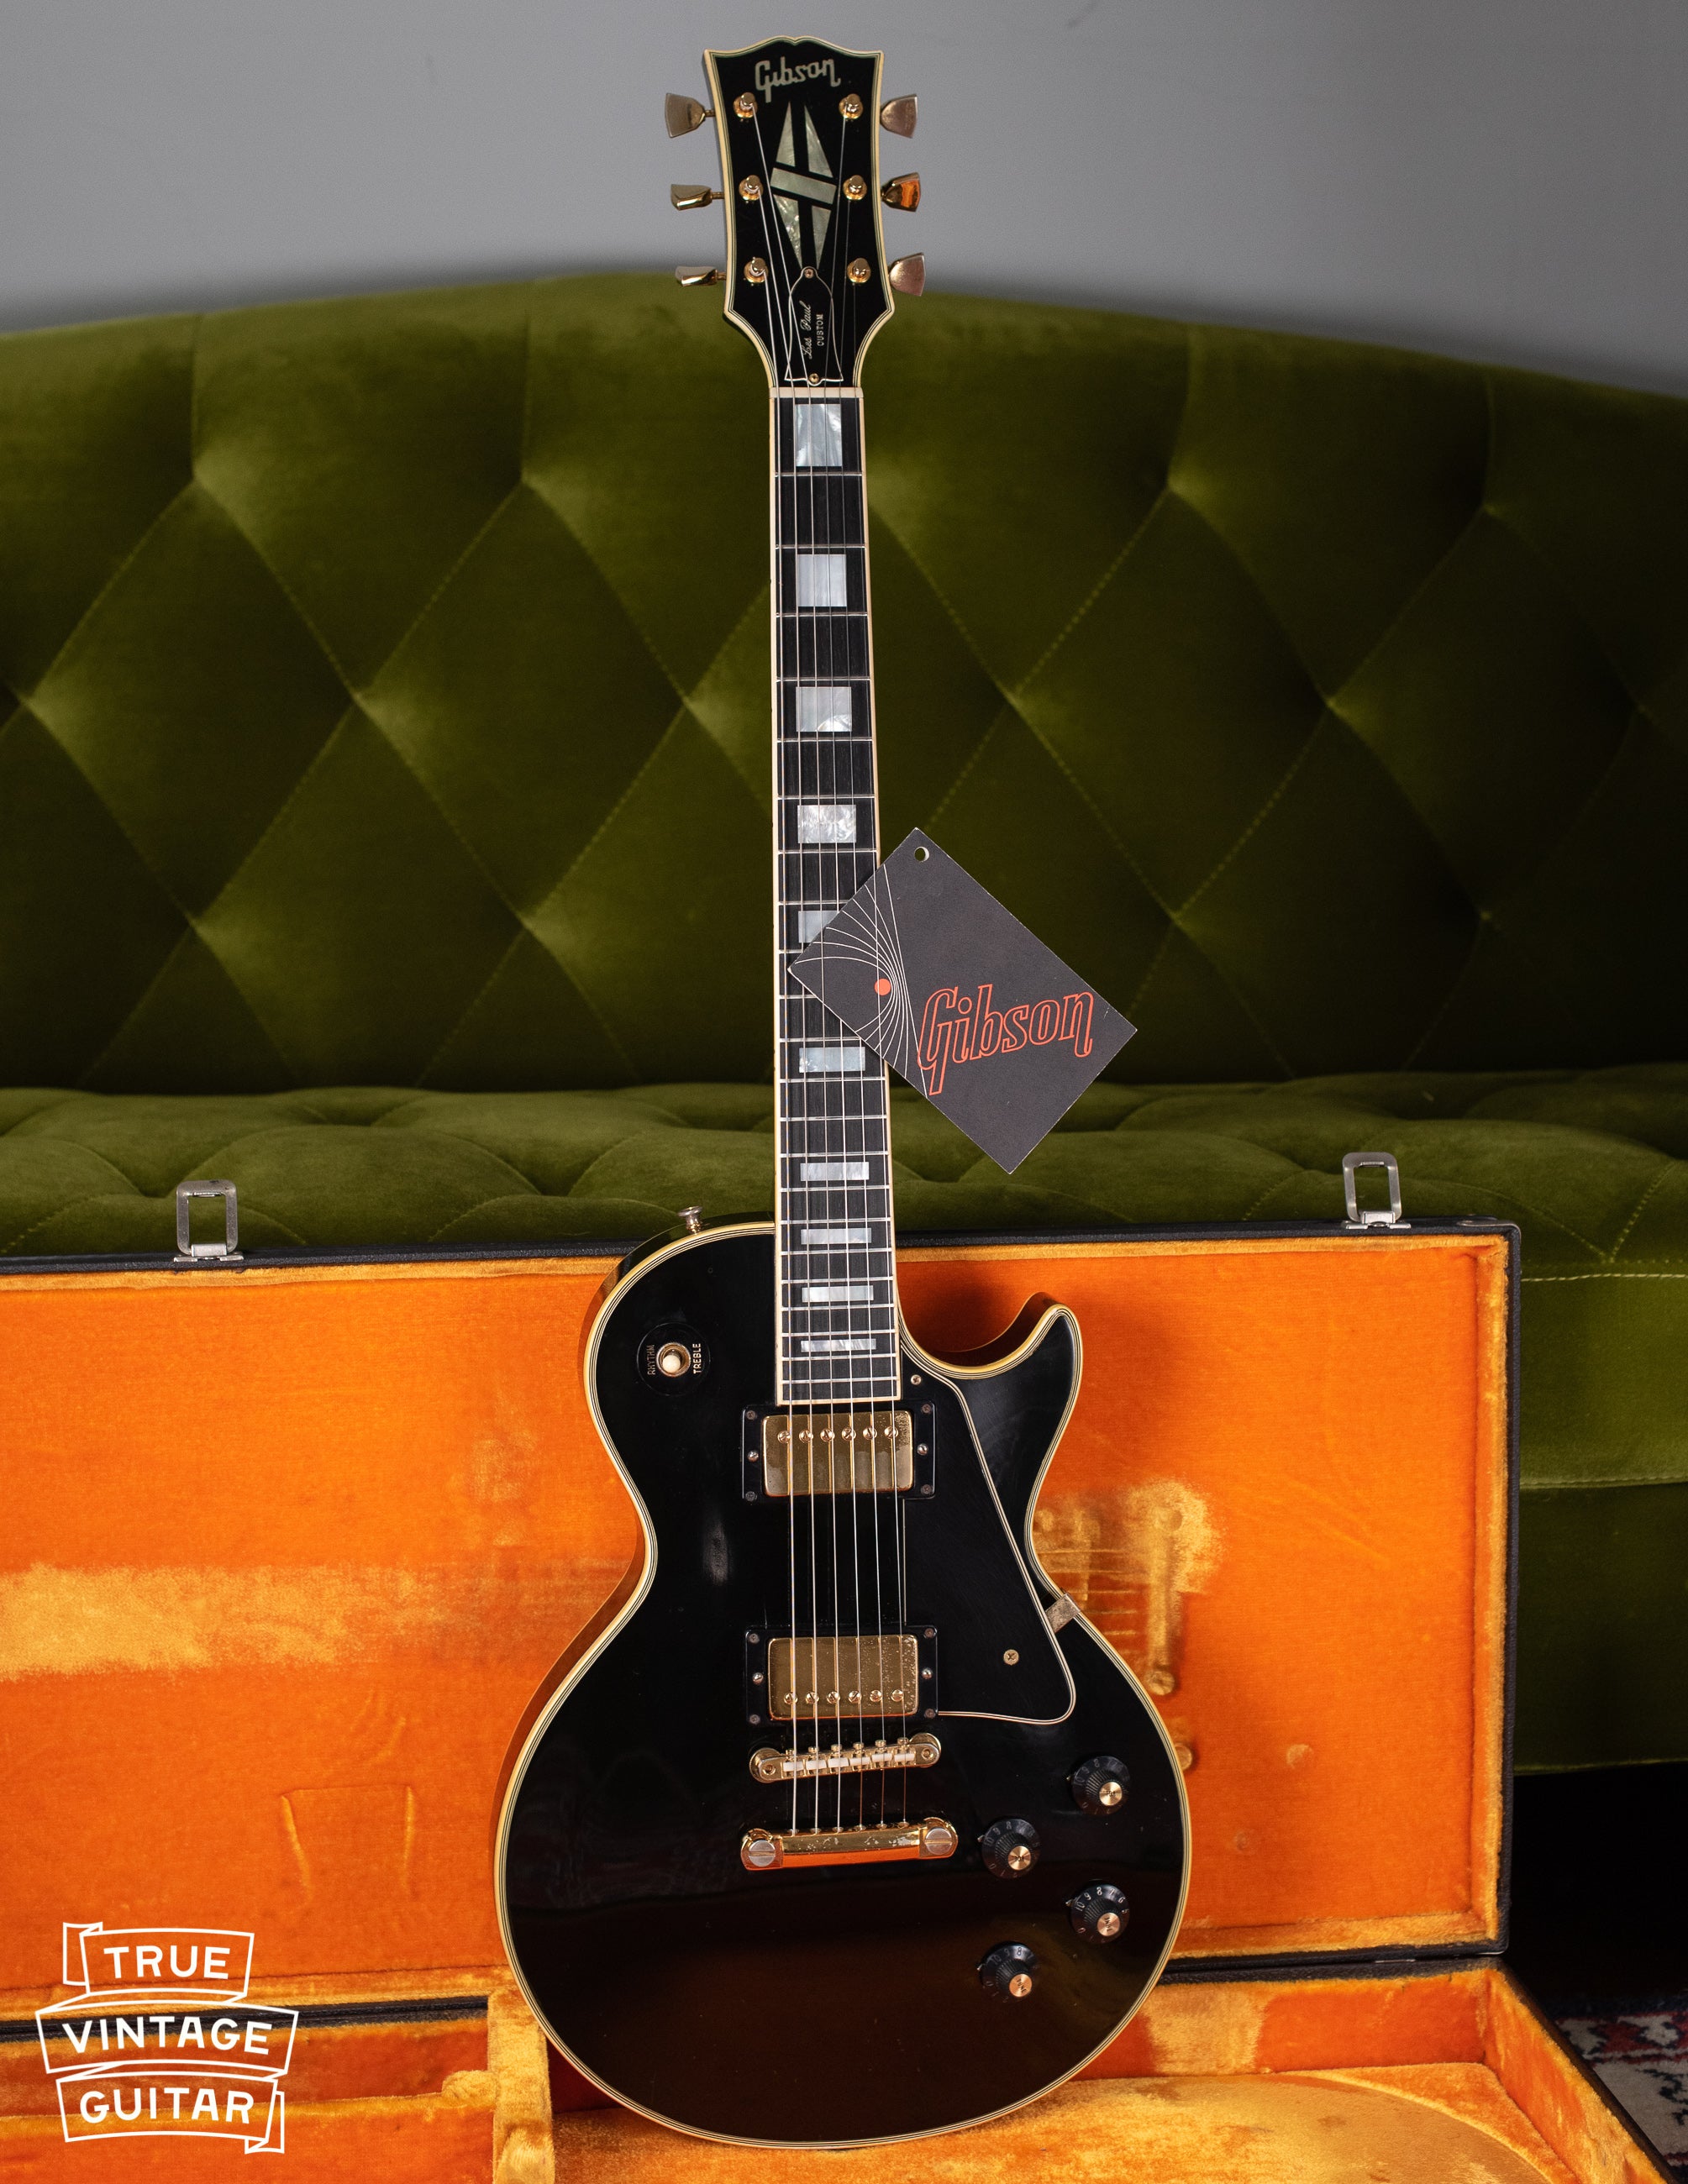 Vintage 1970 Gibson Les Paul Custom black electric guitar